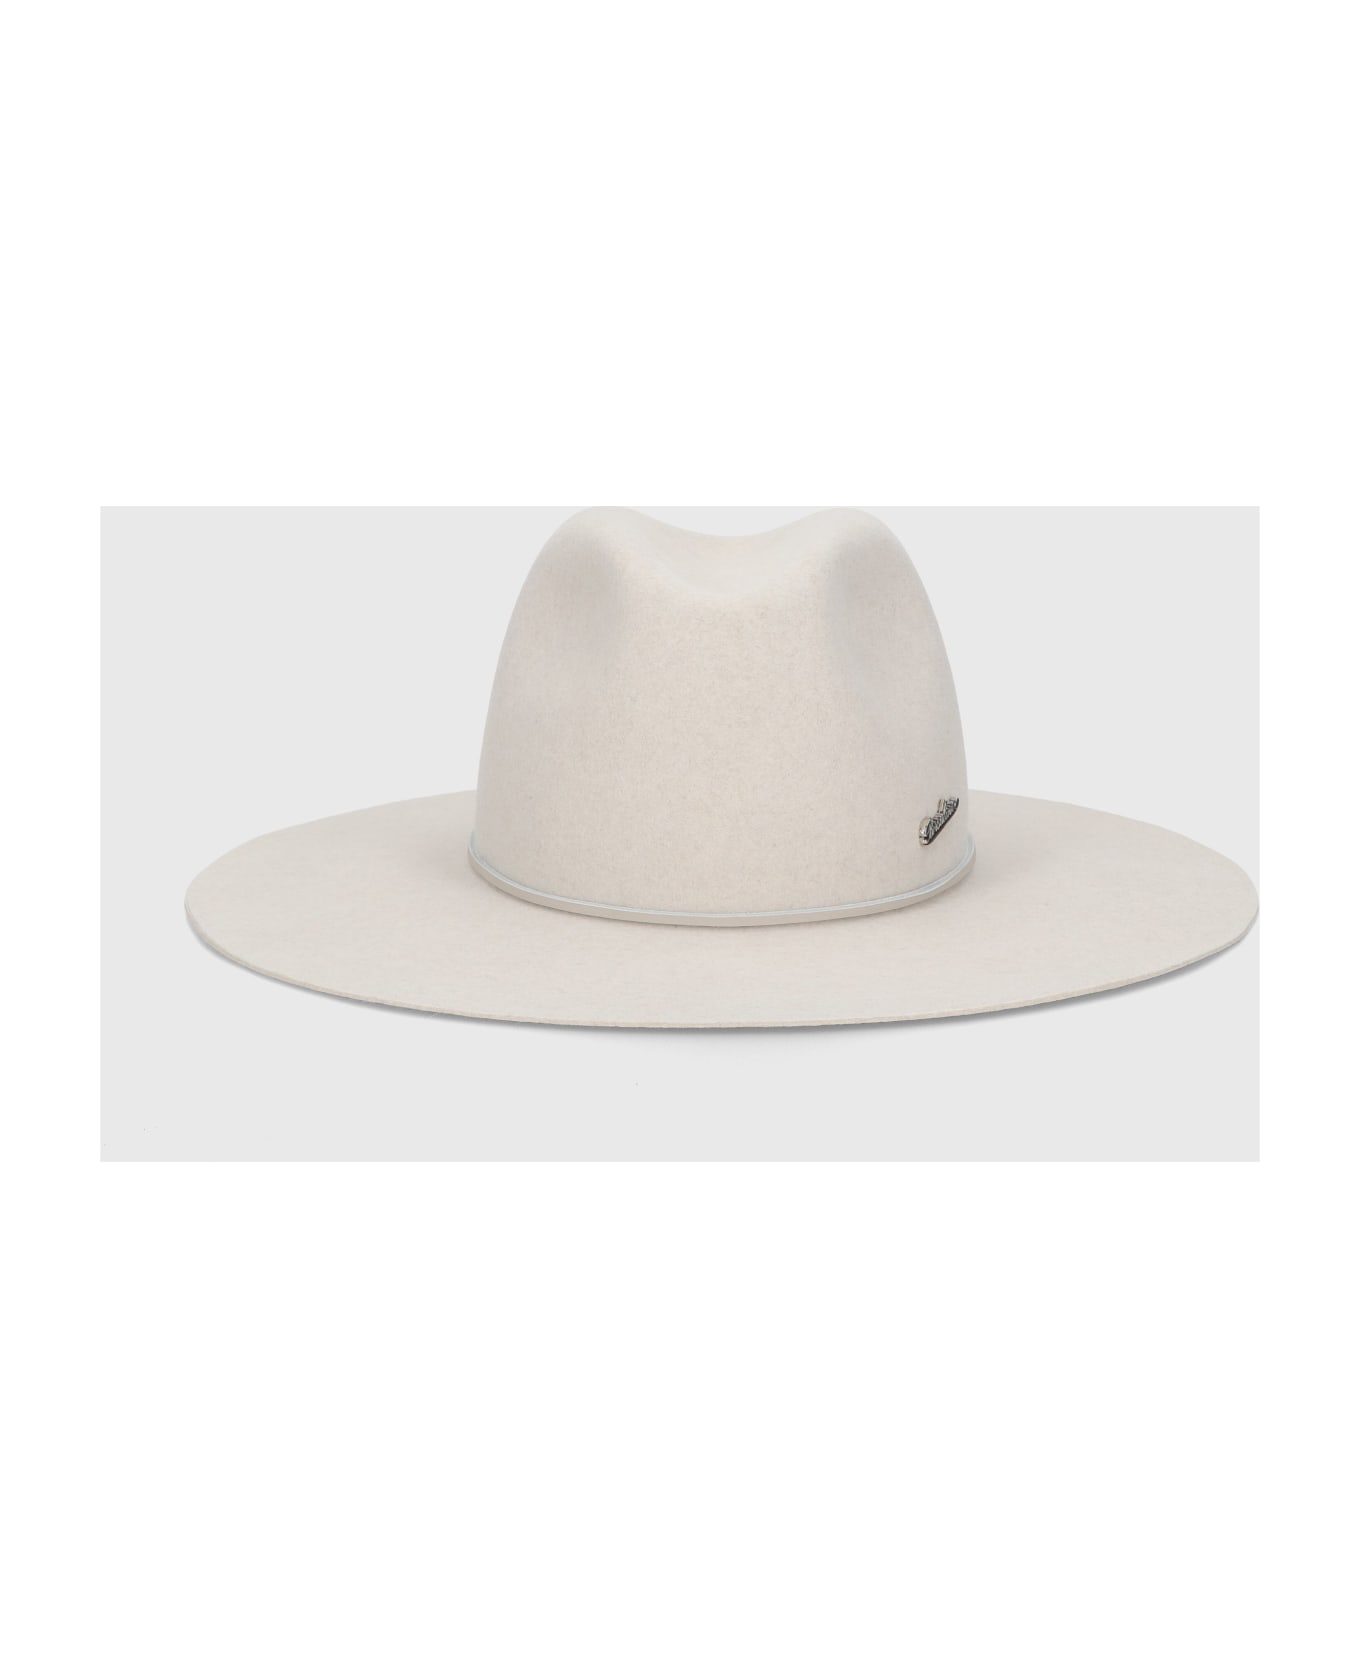 Borsalino Heath Alessandria Brushed Felt Leather Hatband - BEIGE